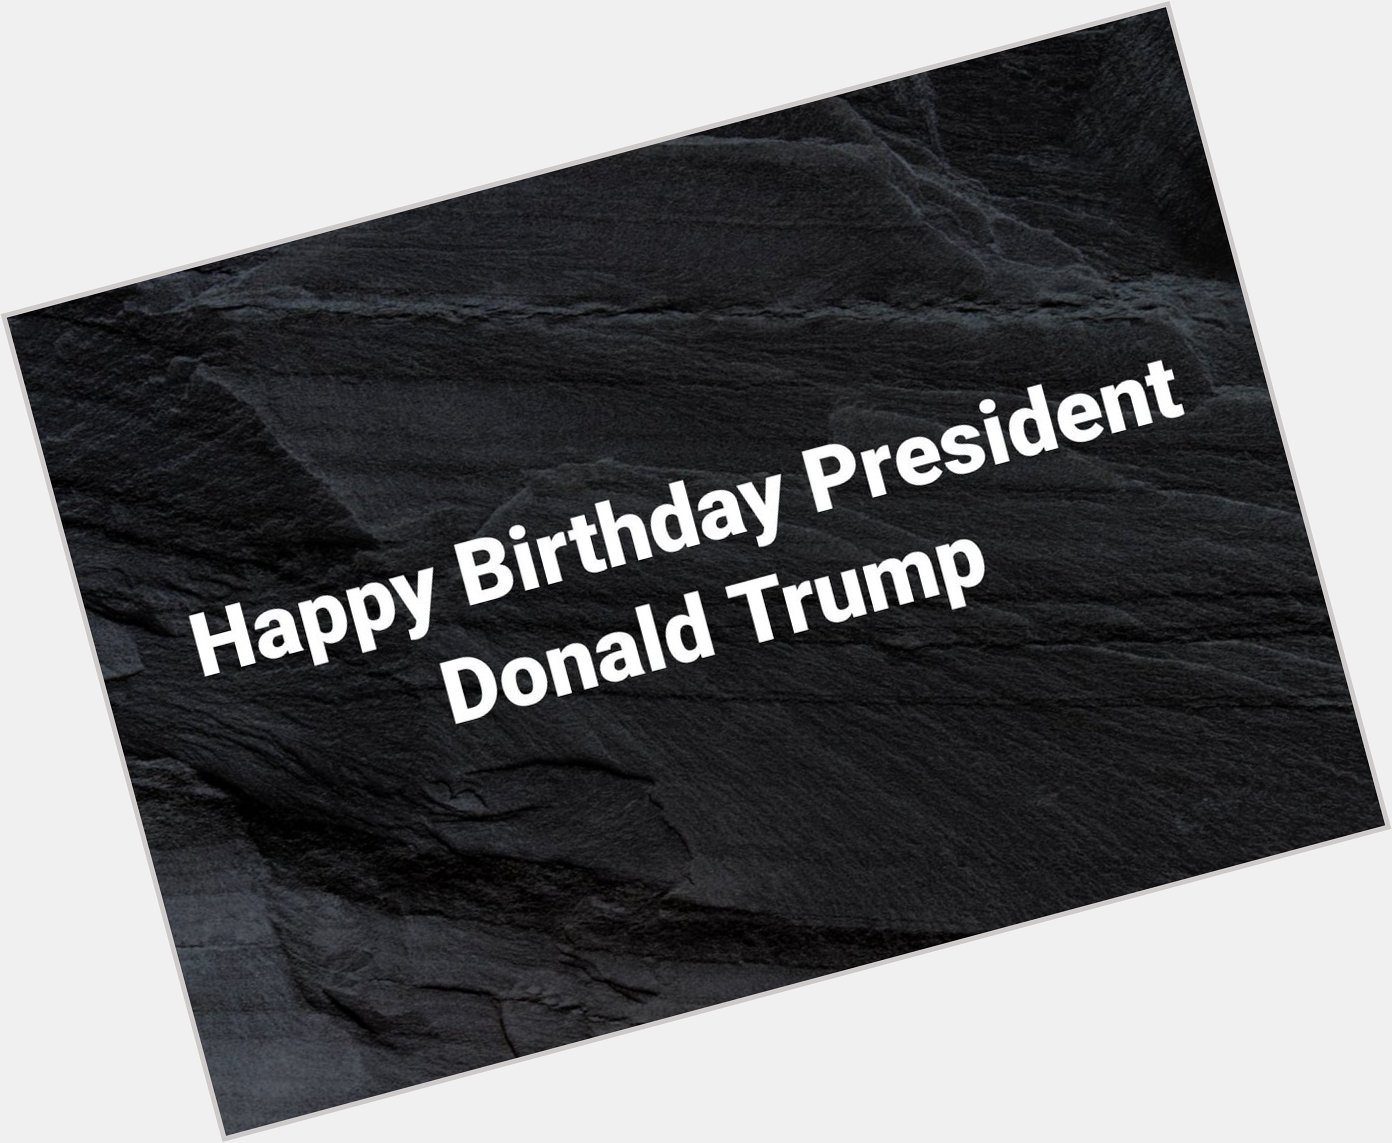 Happy 

r Birthday President 
Donald Trump  